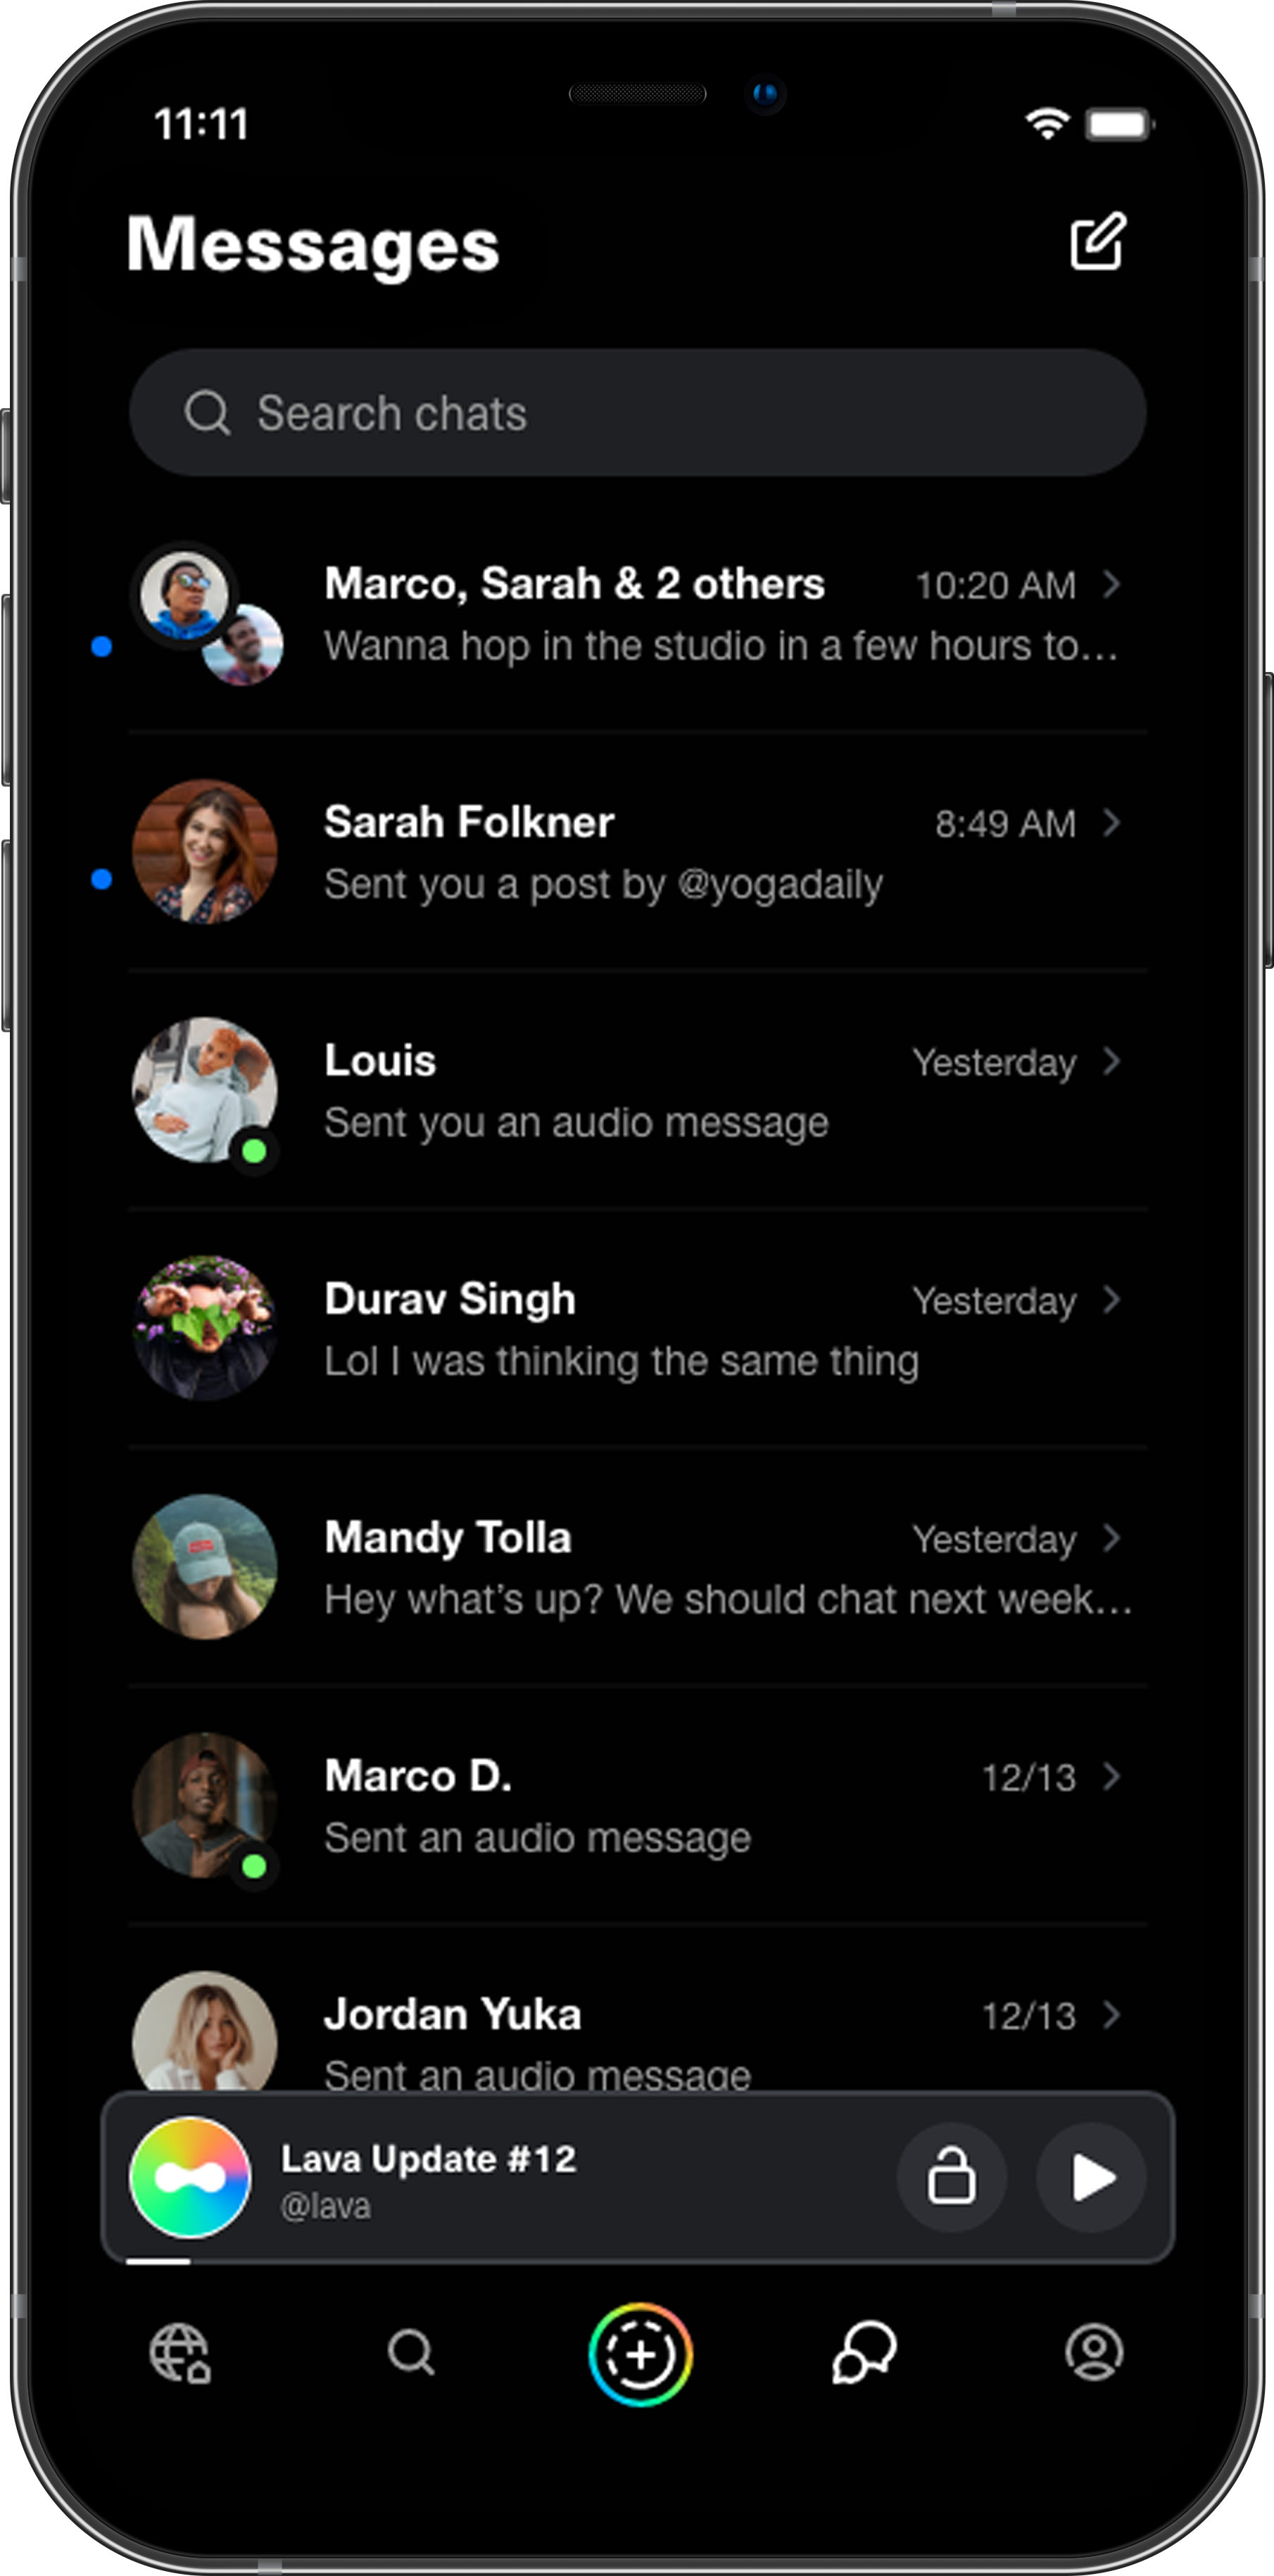 Lava mobile app messaging